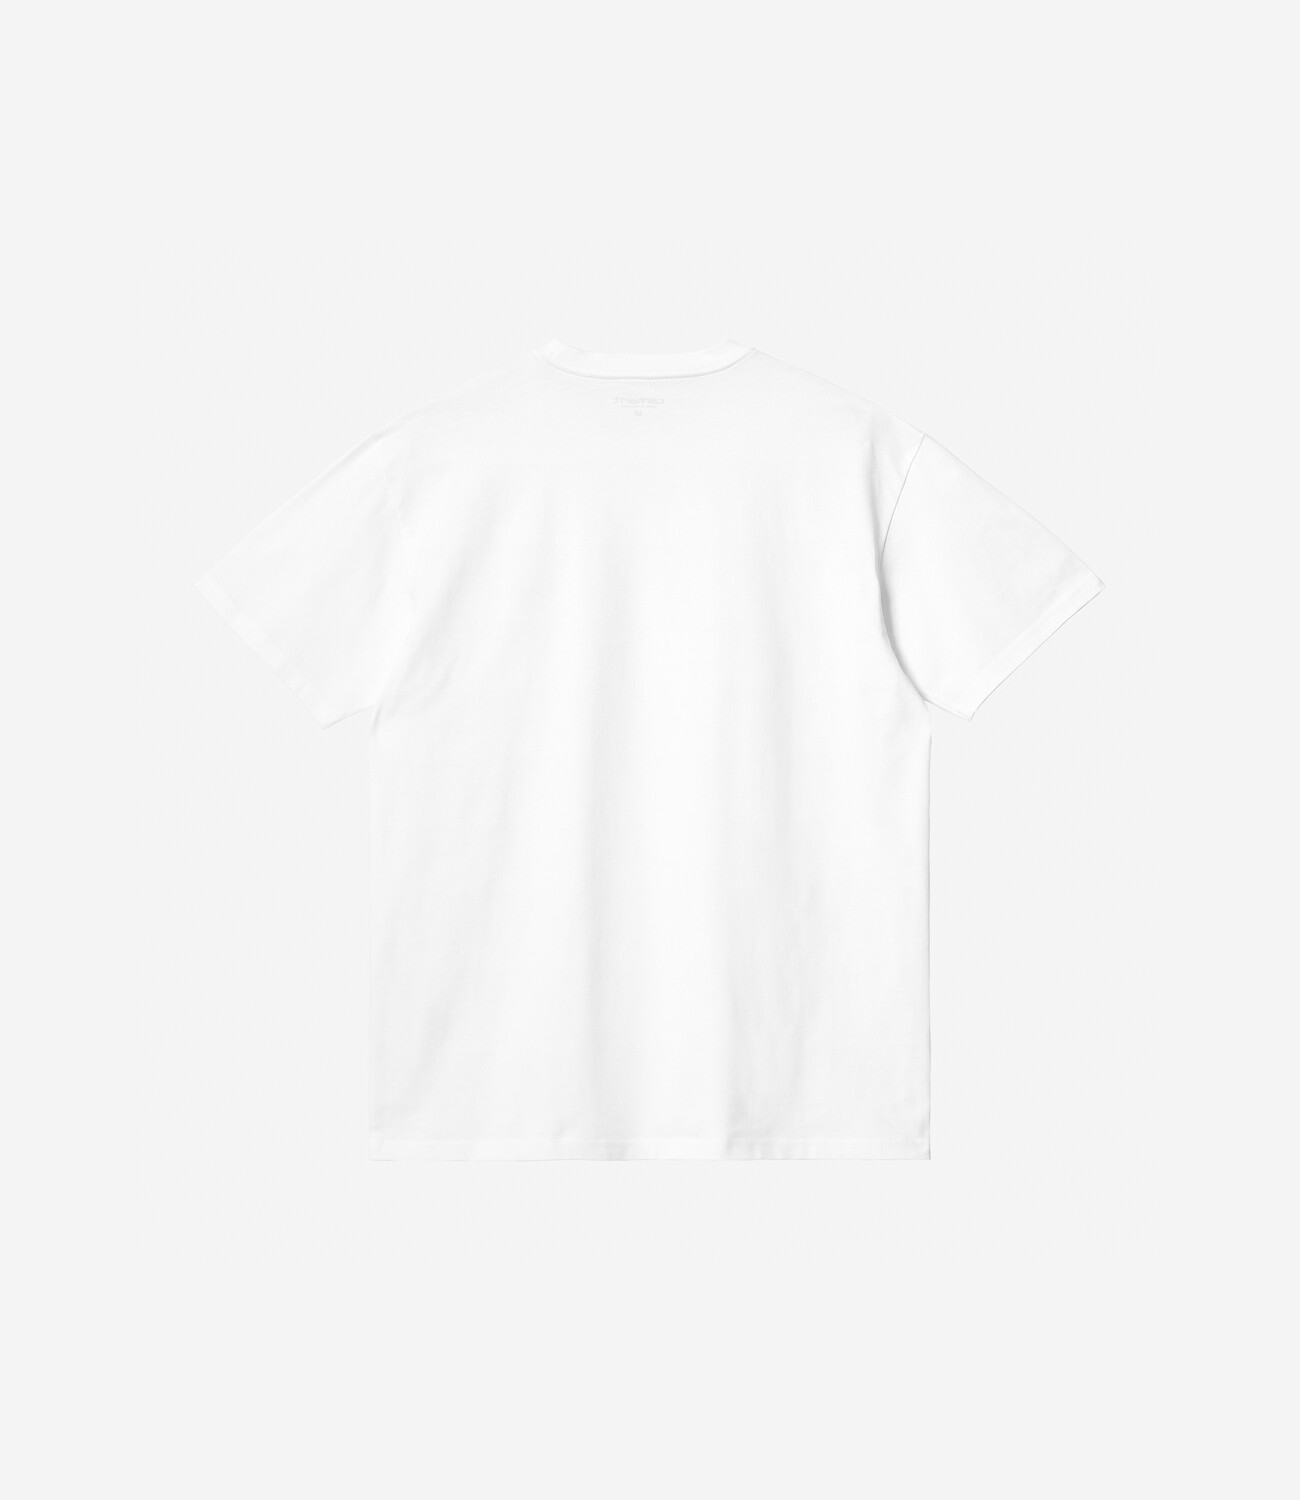 Chase T-shirt - White / Gold